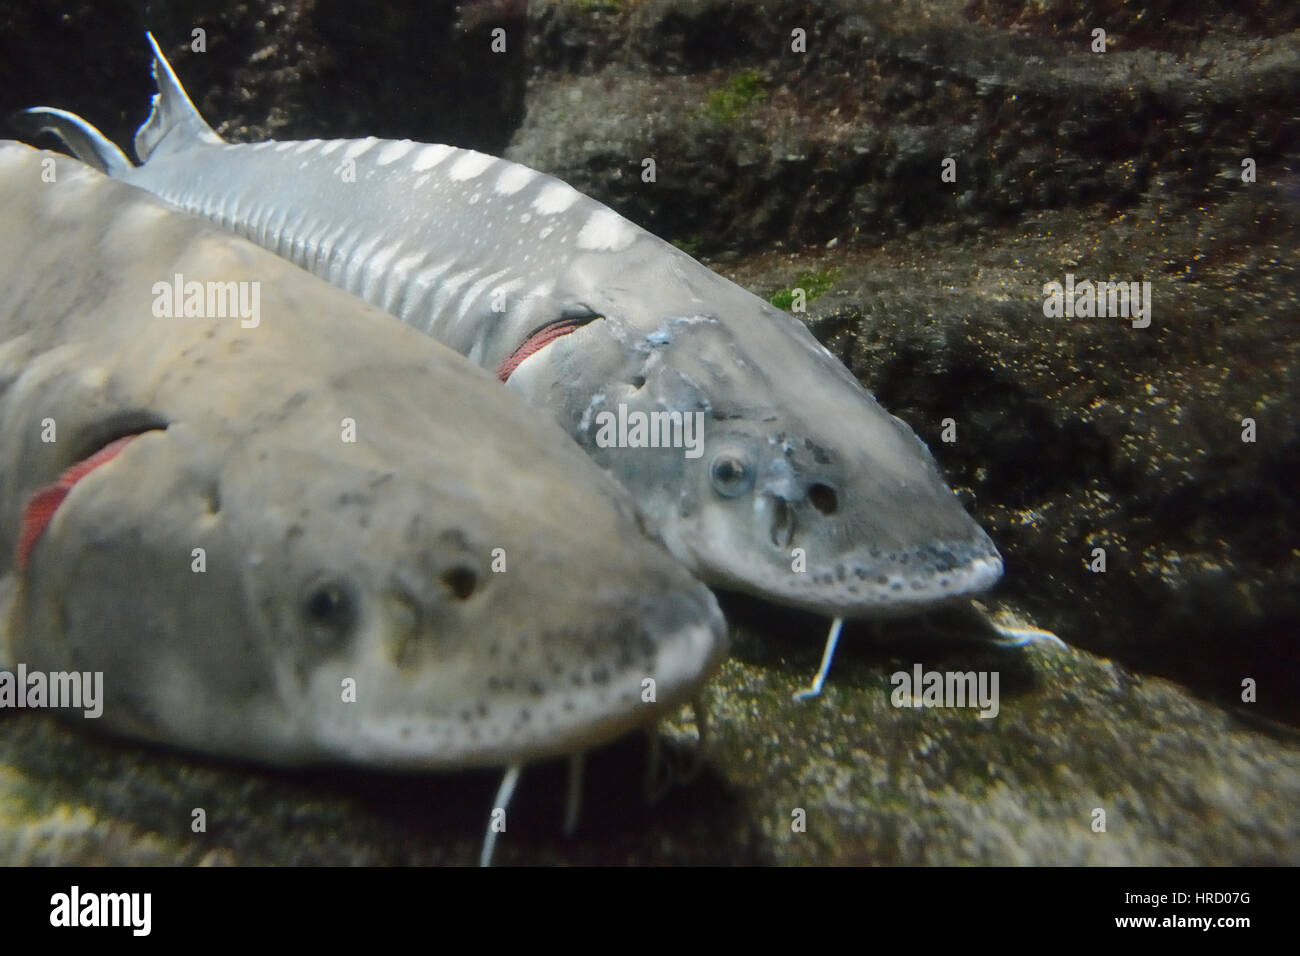 Underwater european sturgeon fish, wildlife siberian fauna Stock Photo